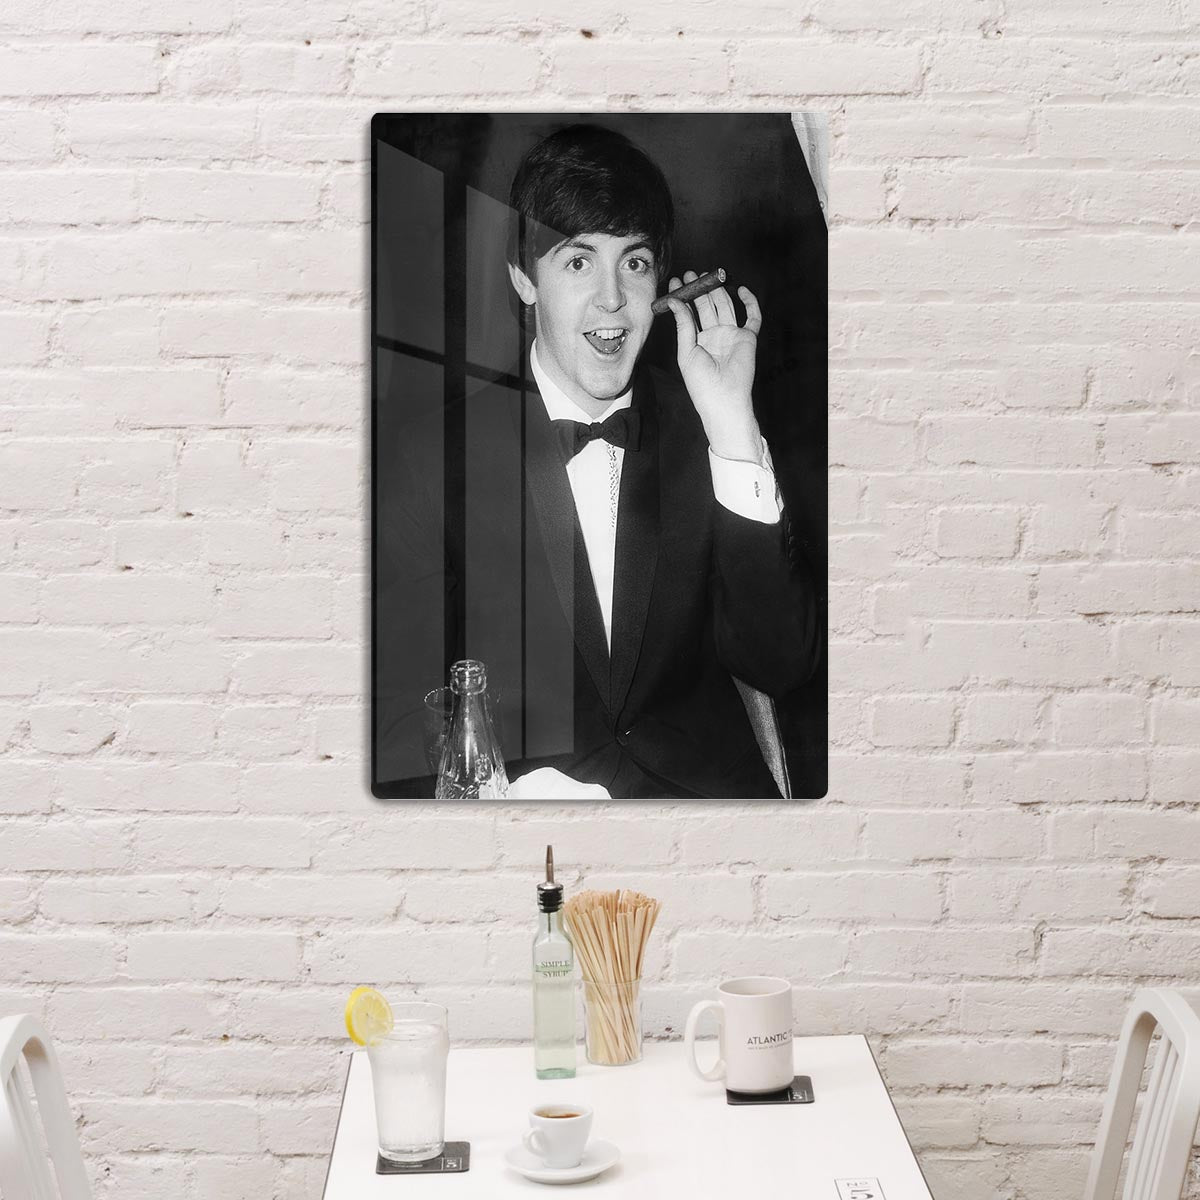 Paul McCartney with a cigar HD Metal Print